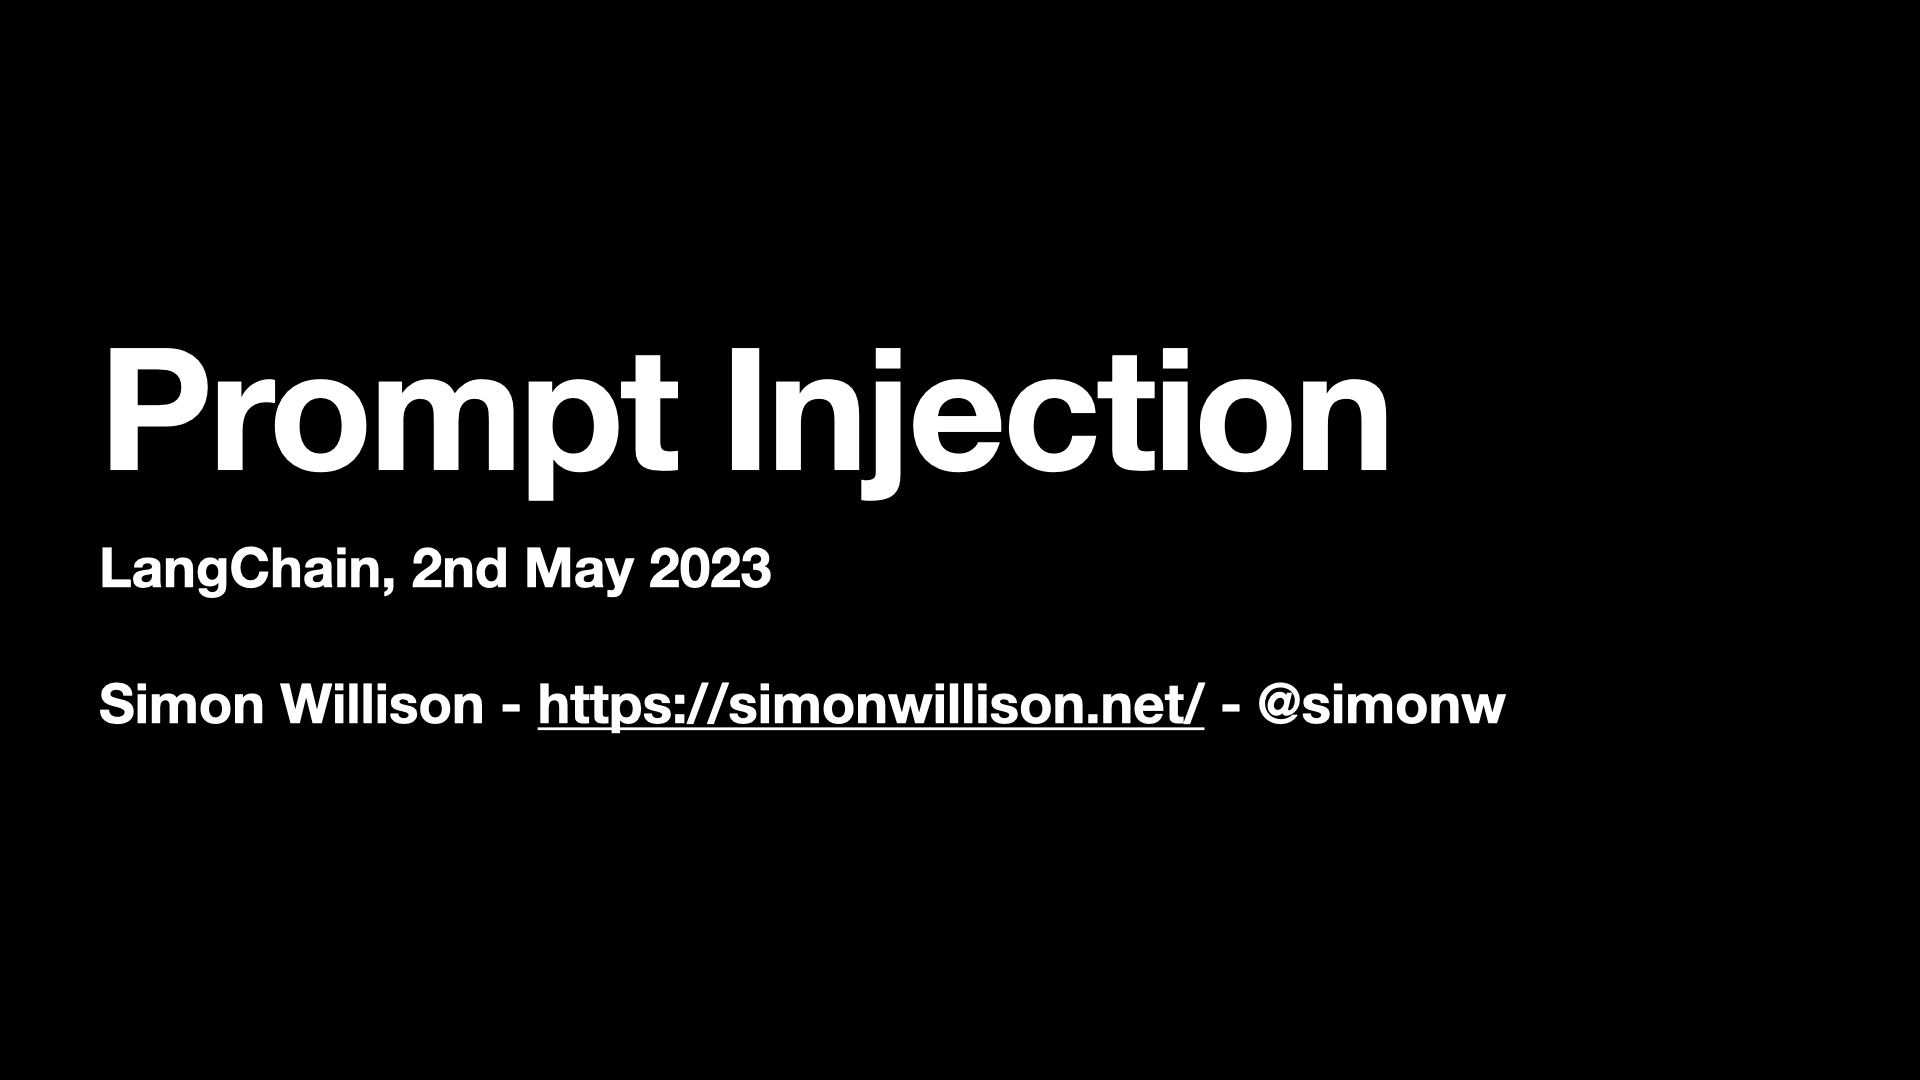 Prompt injection - LangChain 2nd May 2023 - Simon Willison https://simonwillison.net @simonw